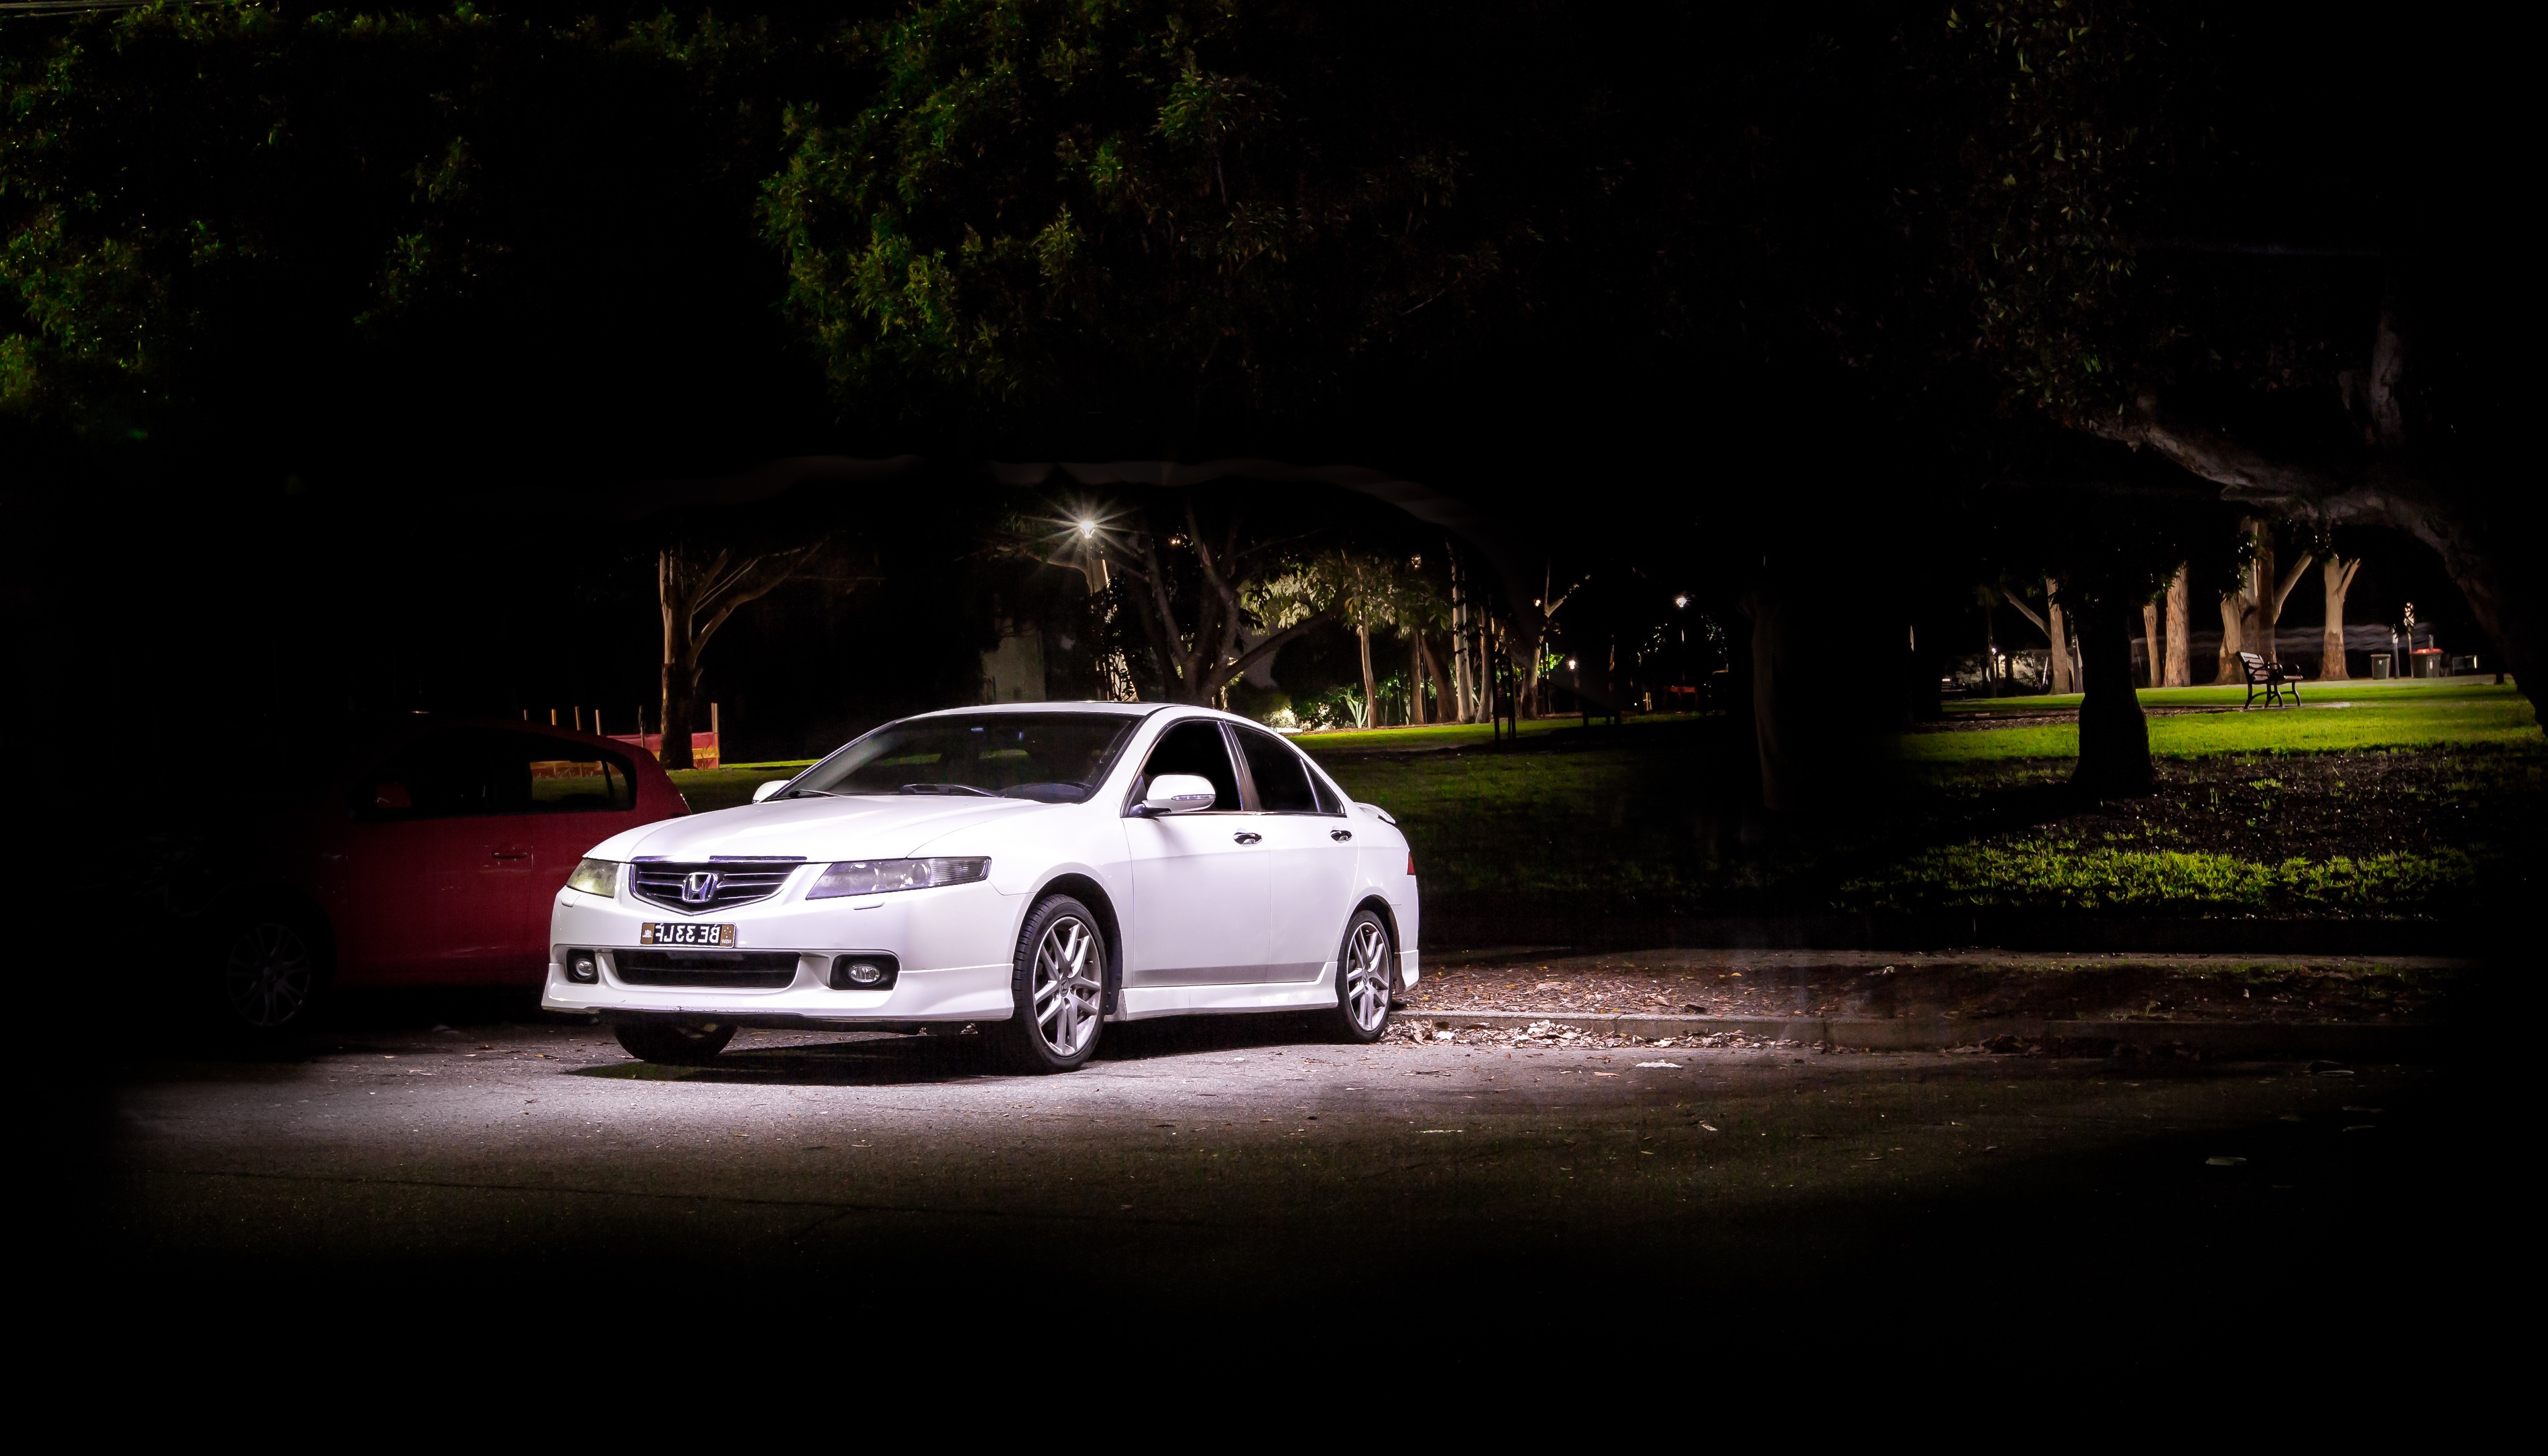 Honda Accord Euro Long exposure light painting night automotive photography